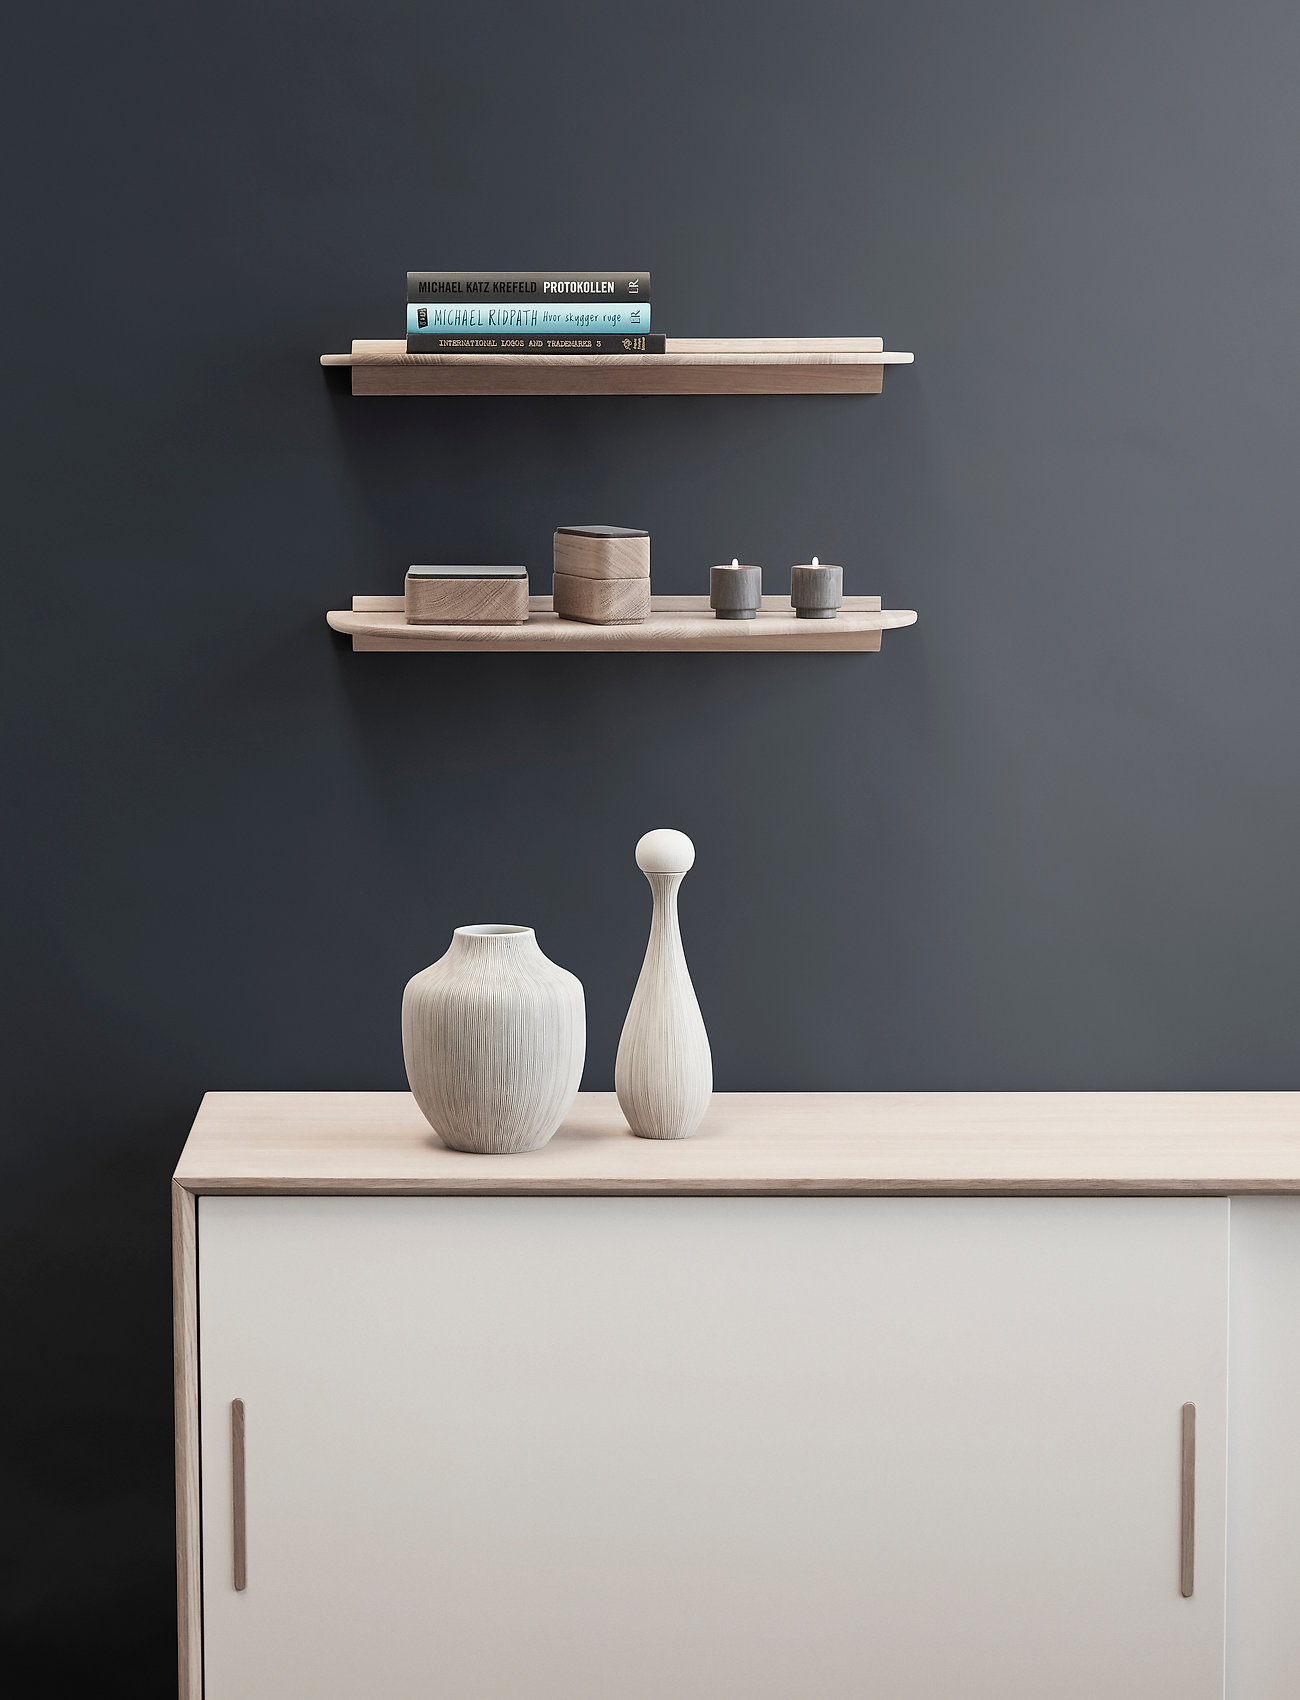 Andersen Furniture - Shelf 3 - oak - 1